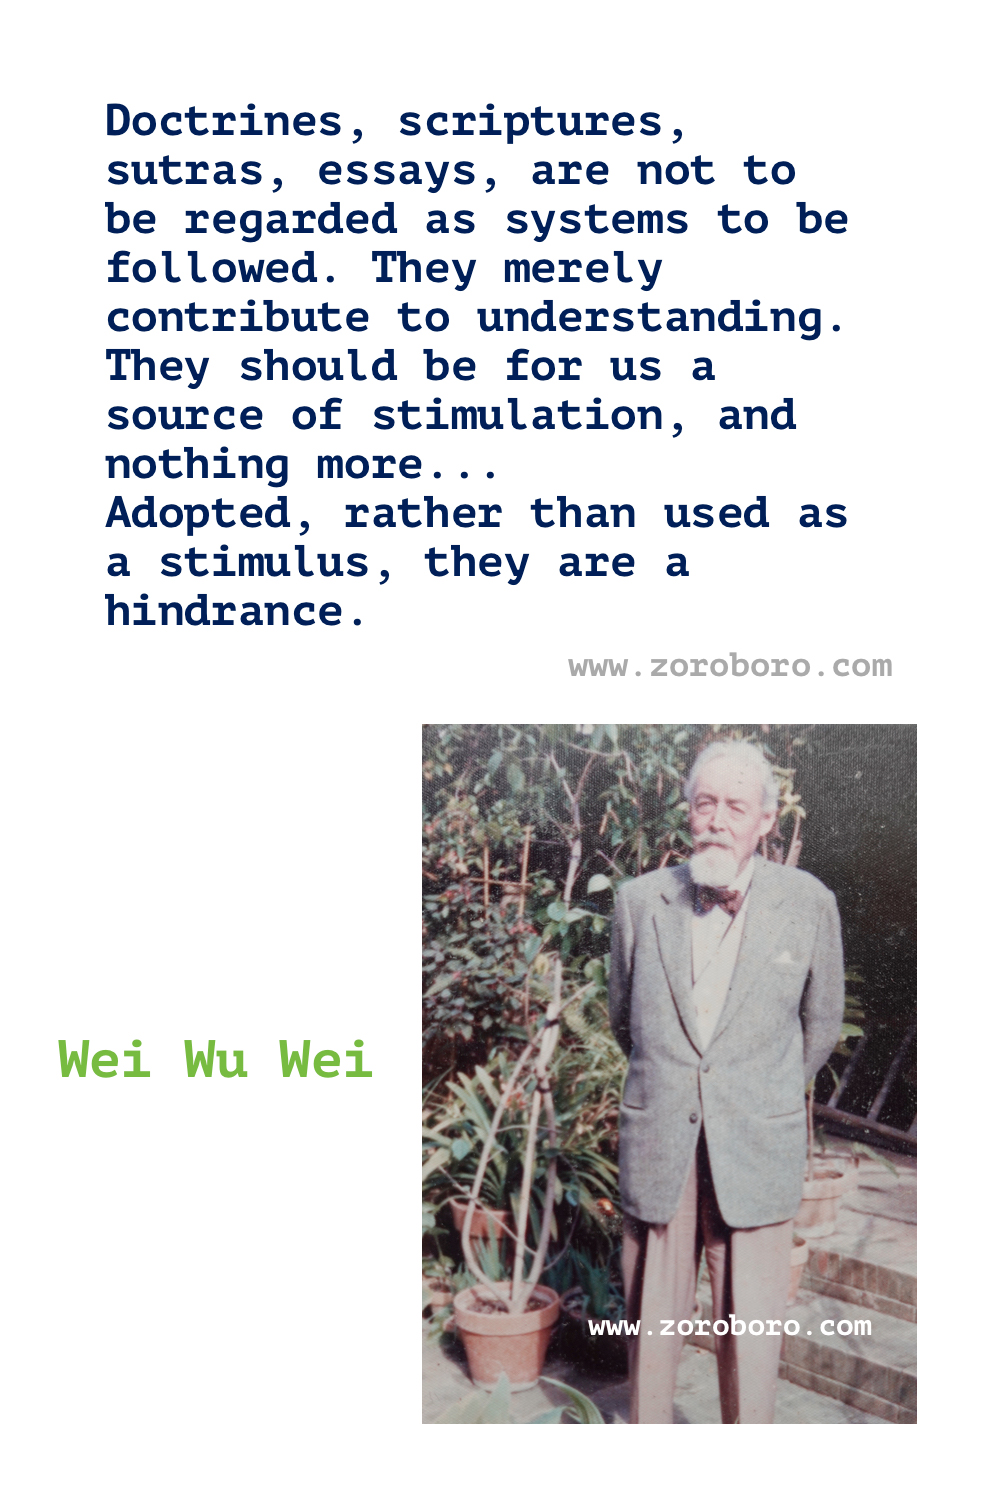 Wei Wu Wei Quotes. Terence Gray Quotes, Spiritual, Yoga & Buddhism Quotes. Wei Wu Wei Philosophy (Author). Wei Wu Wei Books Quotes